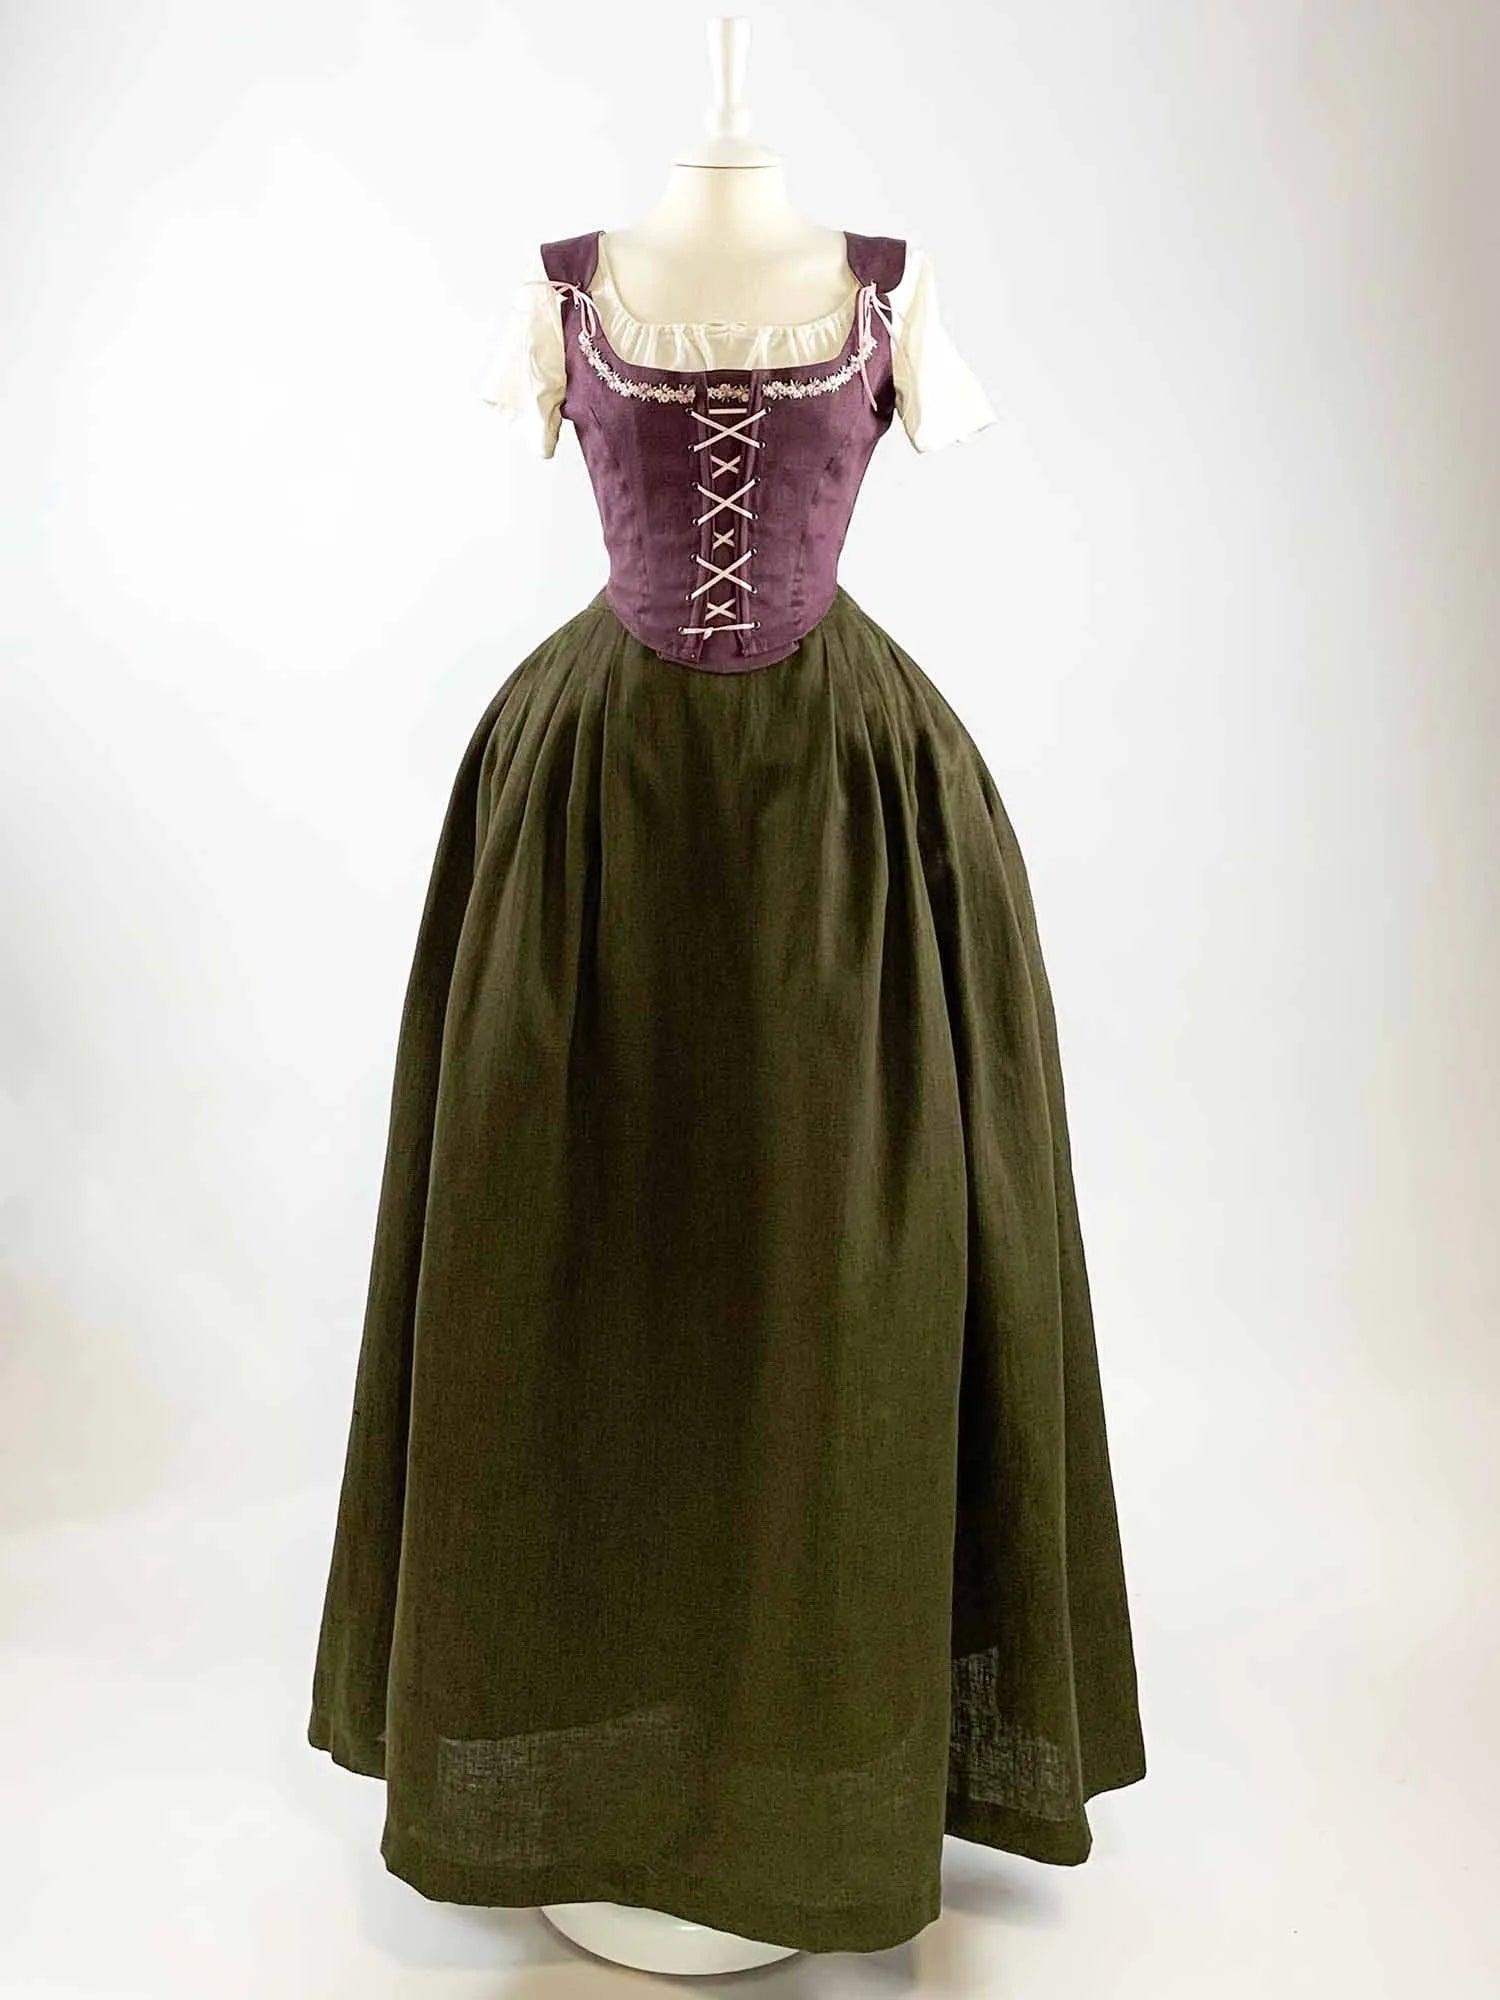 ISOLDE, Renaissance Costume in Purple &amp; Moss Green Linen - Atelier Serraspina - Costume Renaissance en Lin violet et vert mousse